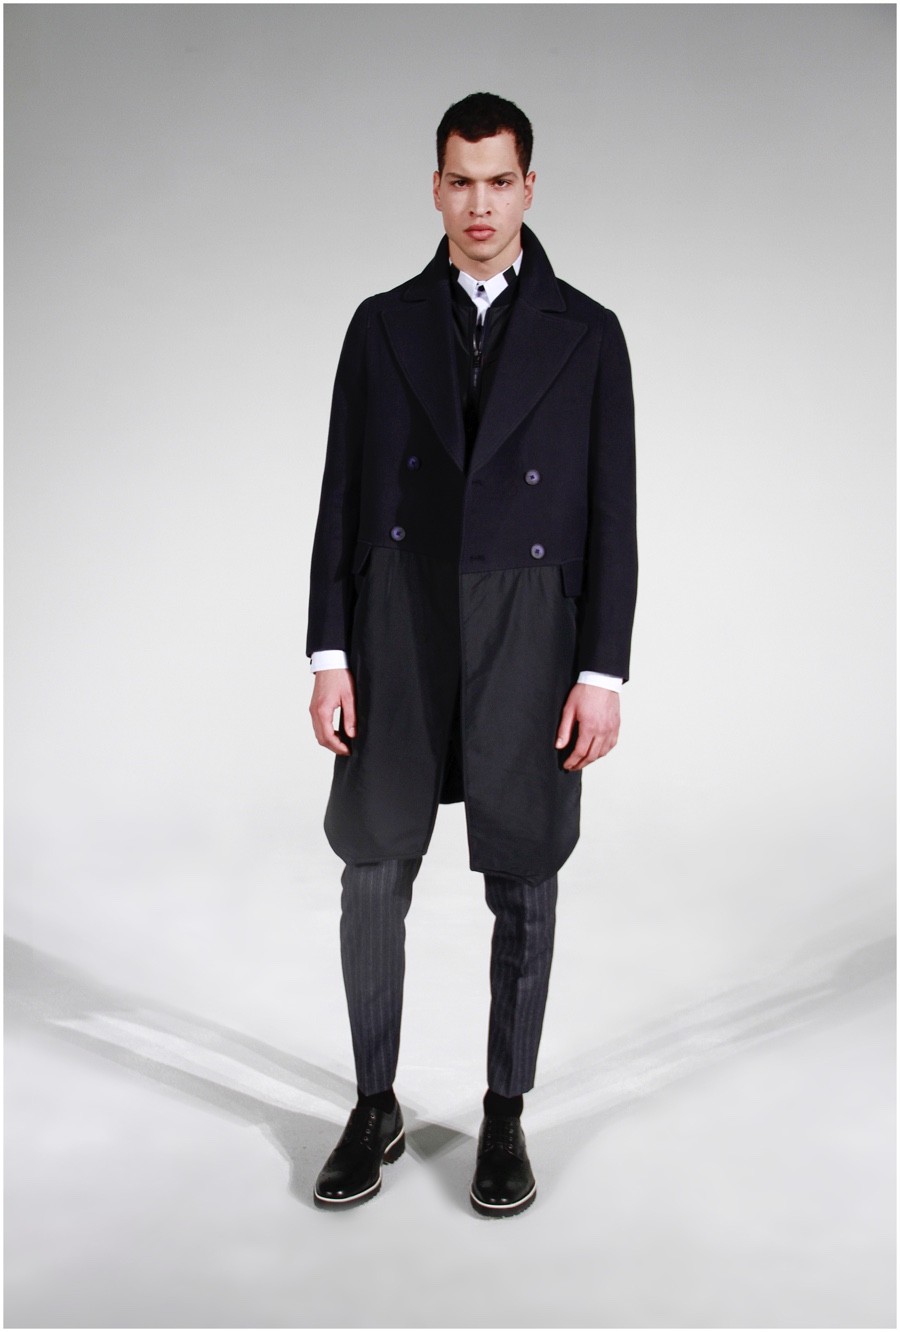 Carlos Campos Fall Winter 2015 Menswear Collection 010